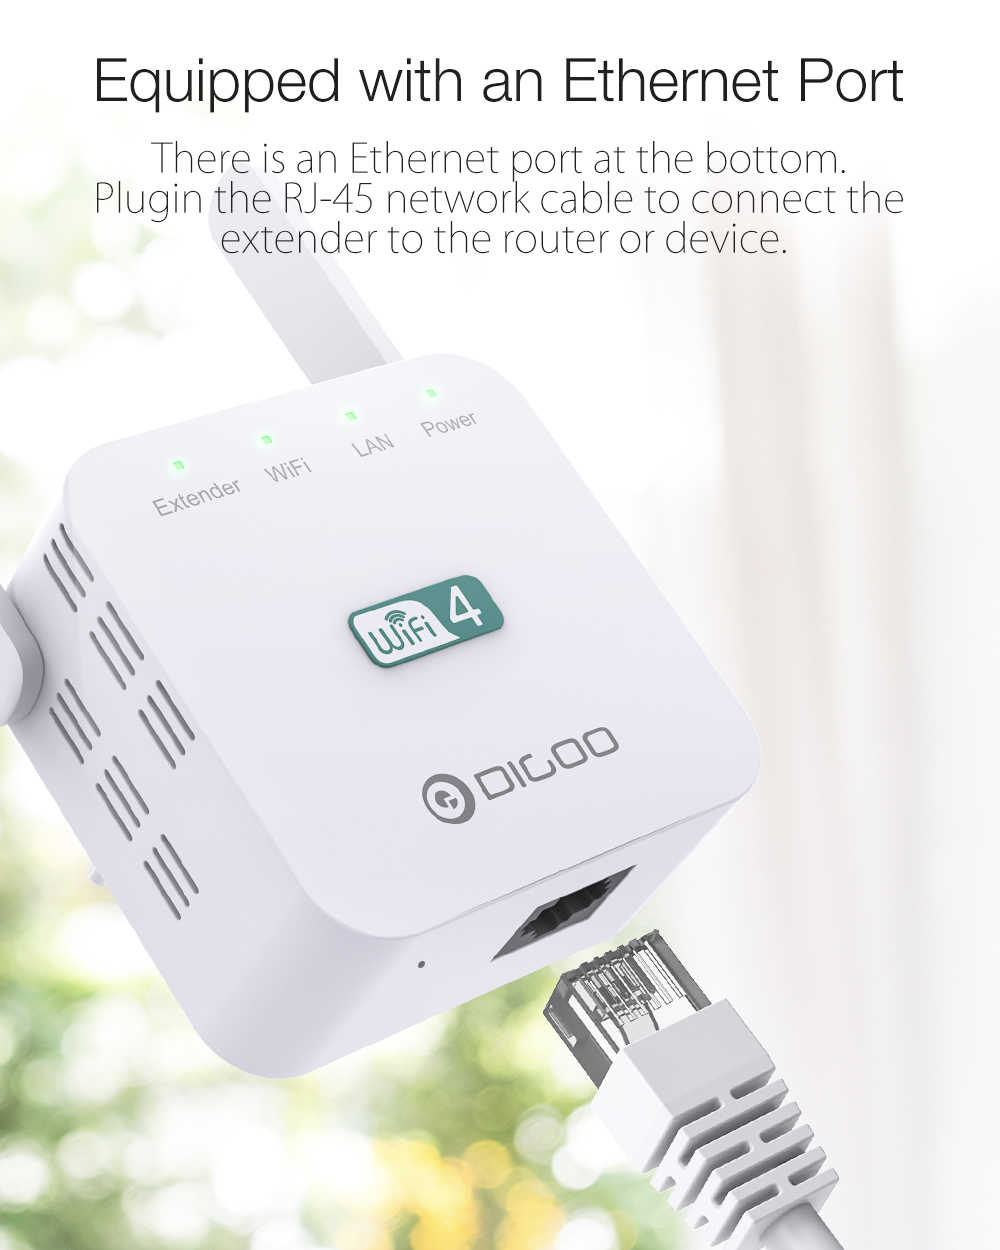 DIGOO-DG-R611-300Mbps-24GHz-WiFi-Range-Extender-EUUSUK-Wall-Plug-Repeater-Wireless-Signal-Booster-Du-1645571